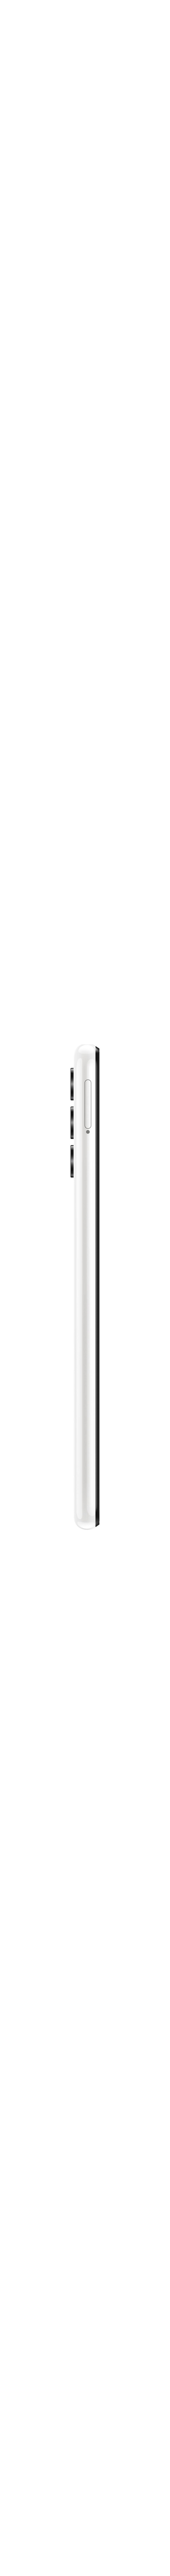 Samsung Galaxy A13 SM-A135F EU 3/32GB, Android, white